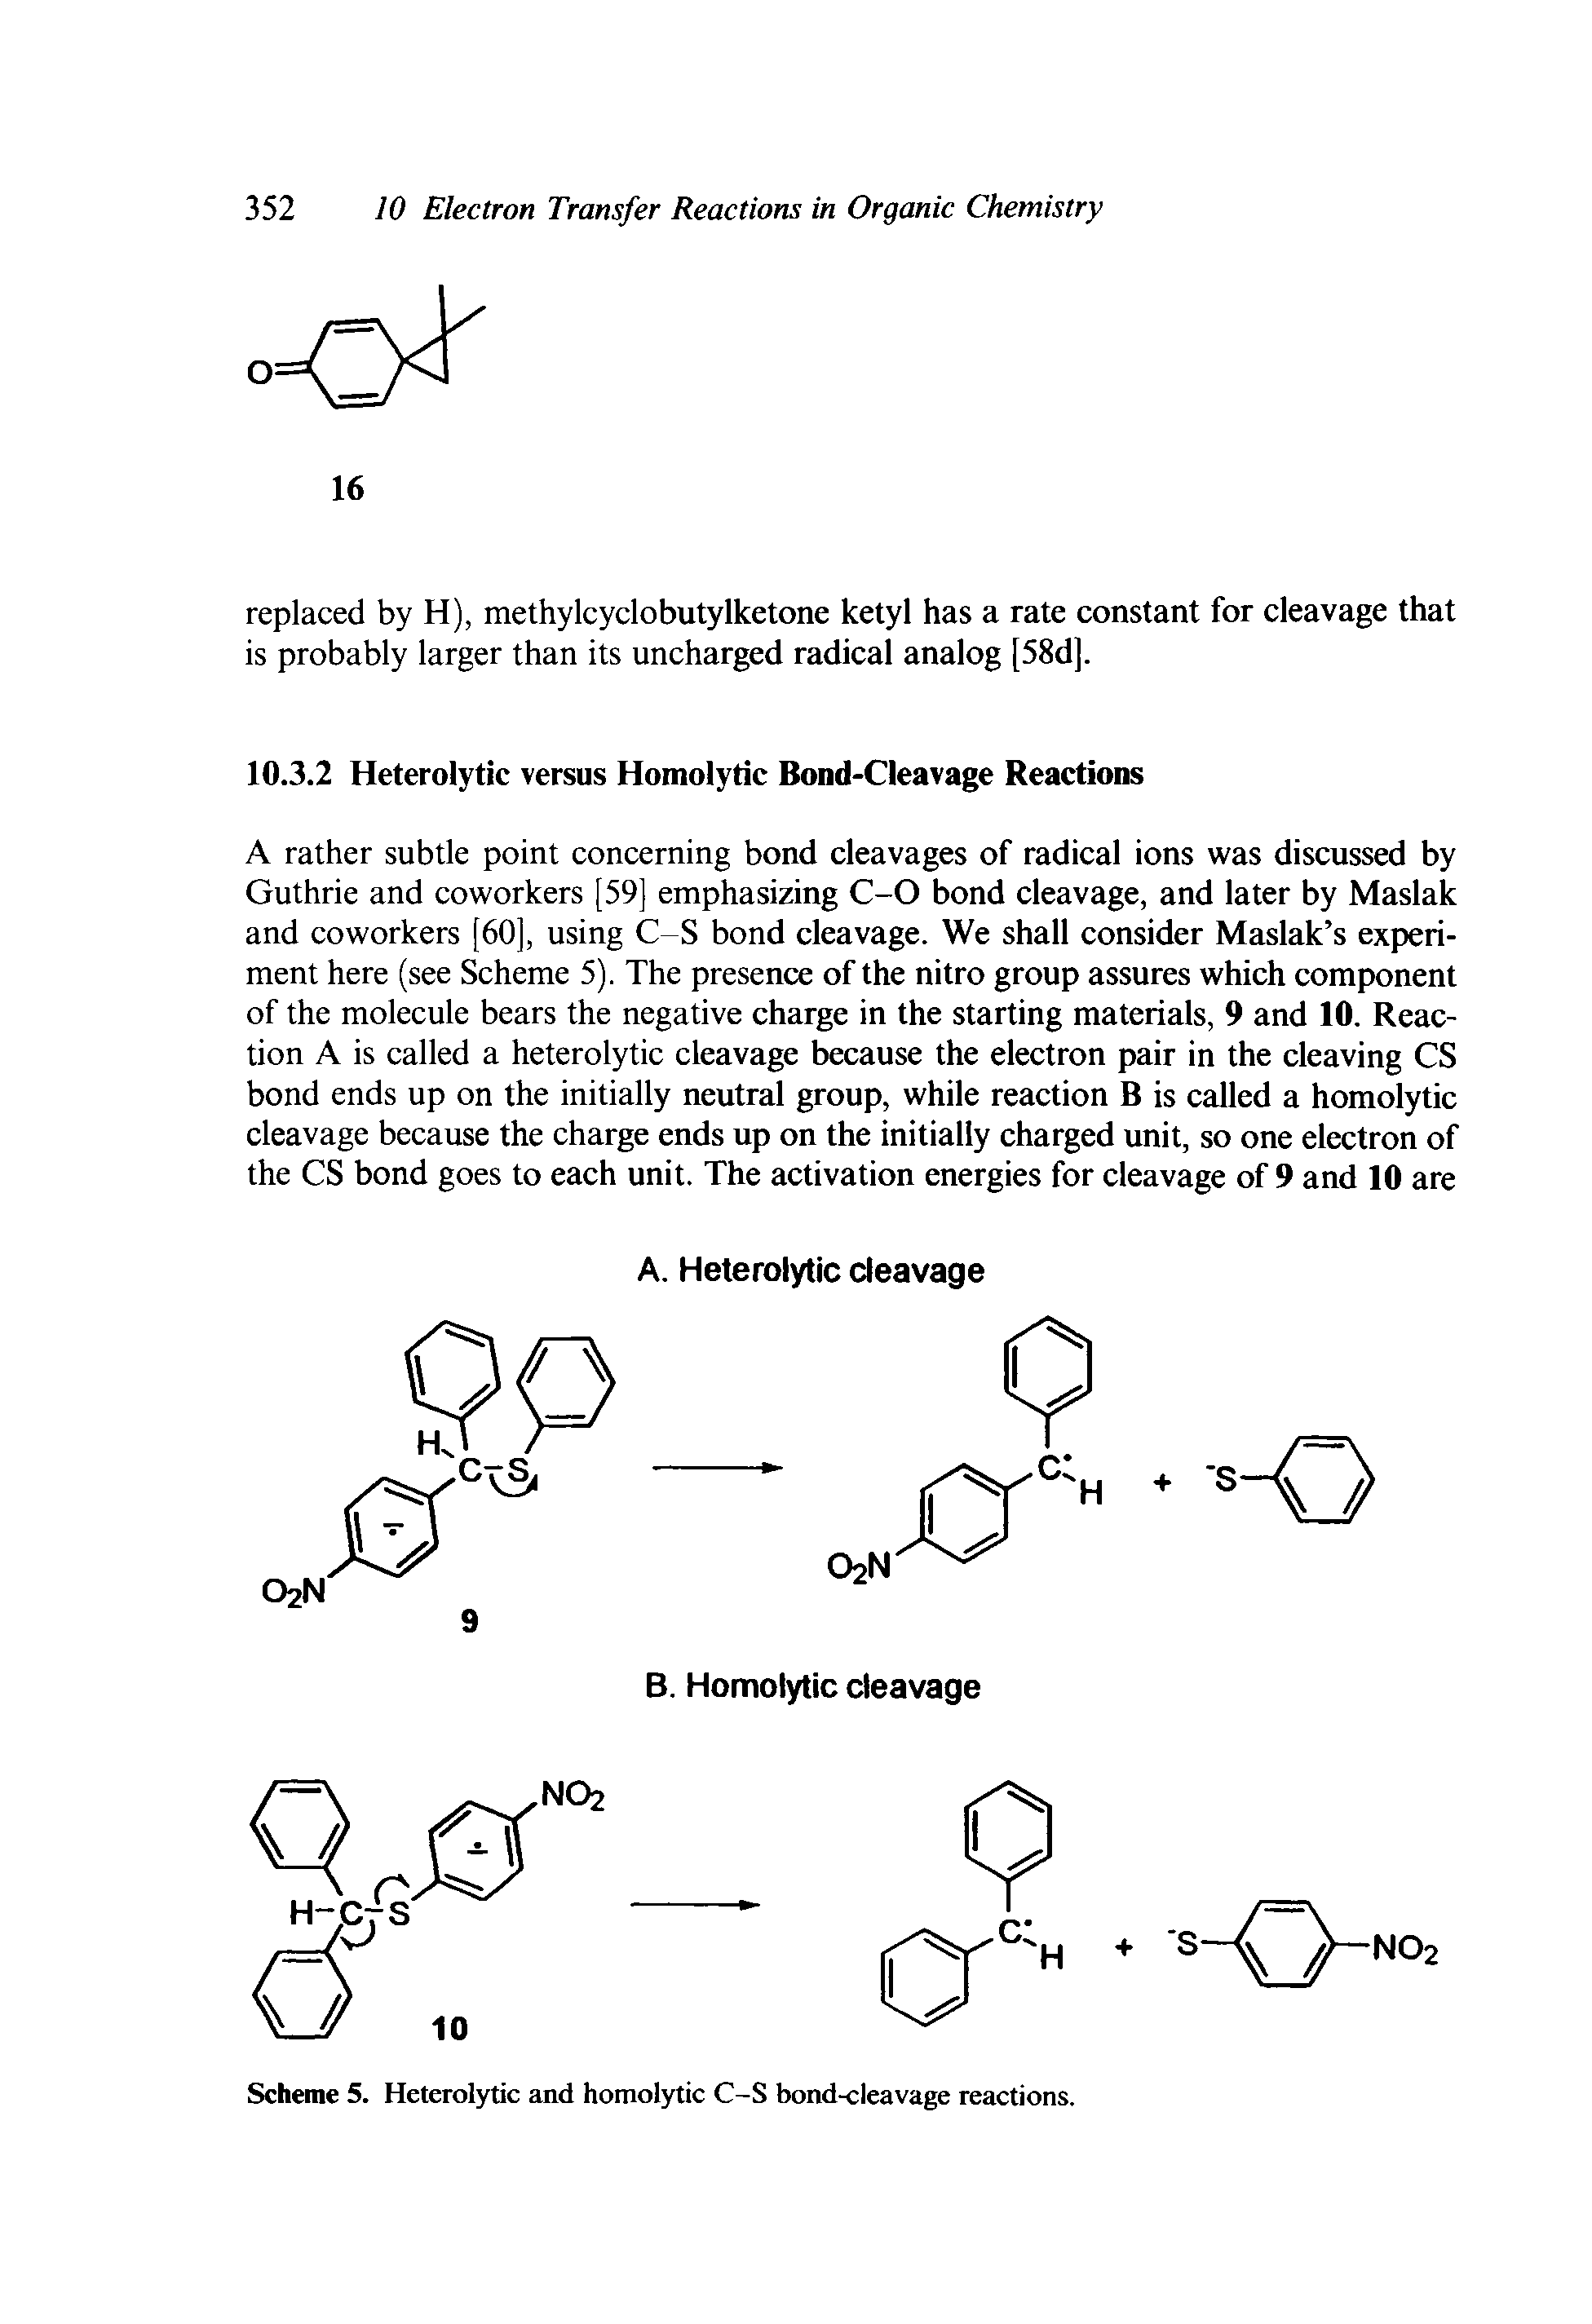 Scheme 5. Heterolytic and homolytic C-S bond-cleavage reactions.